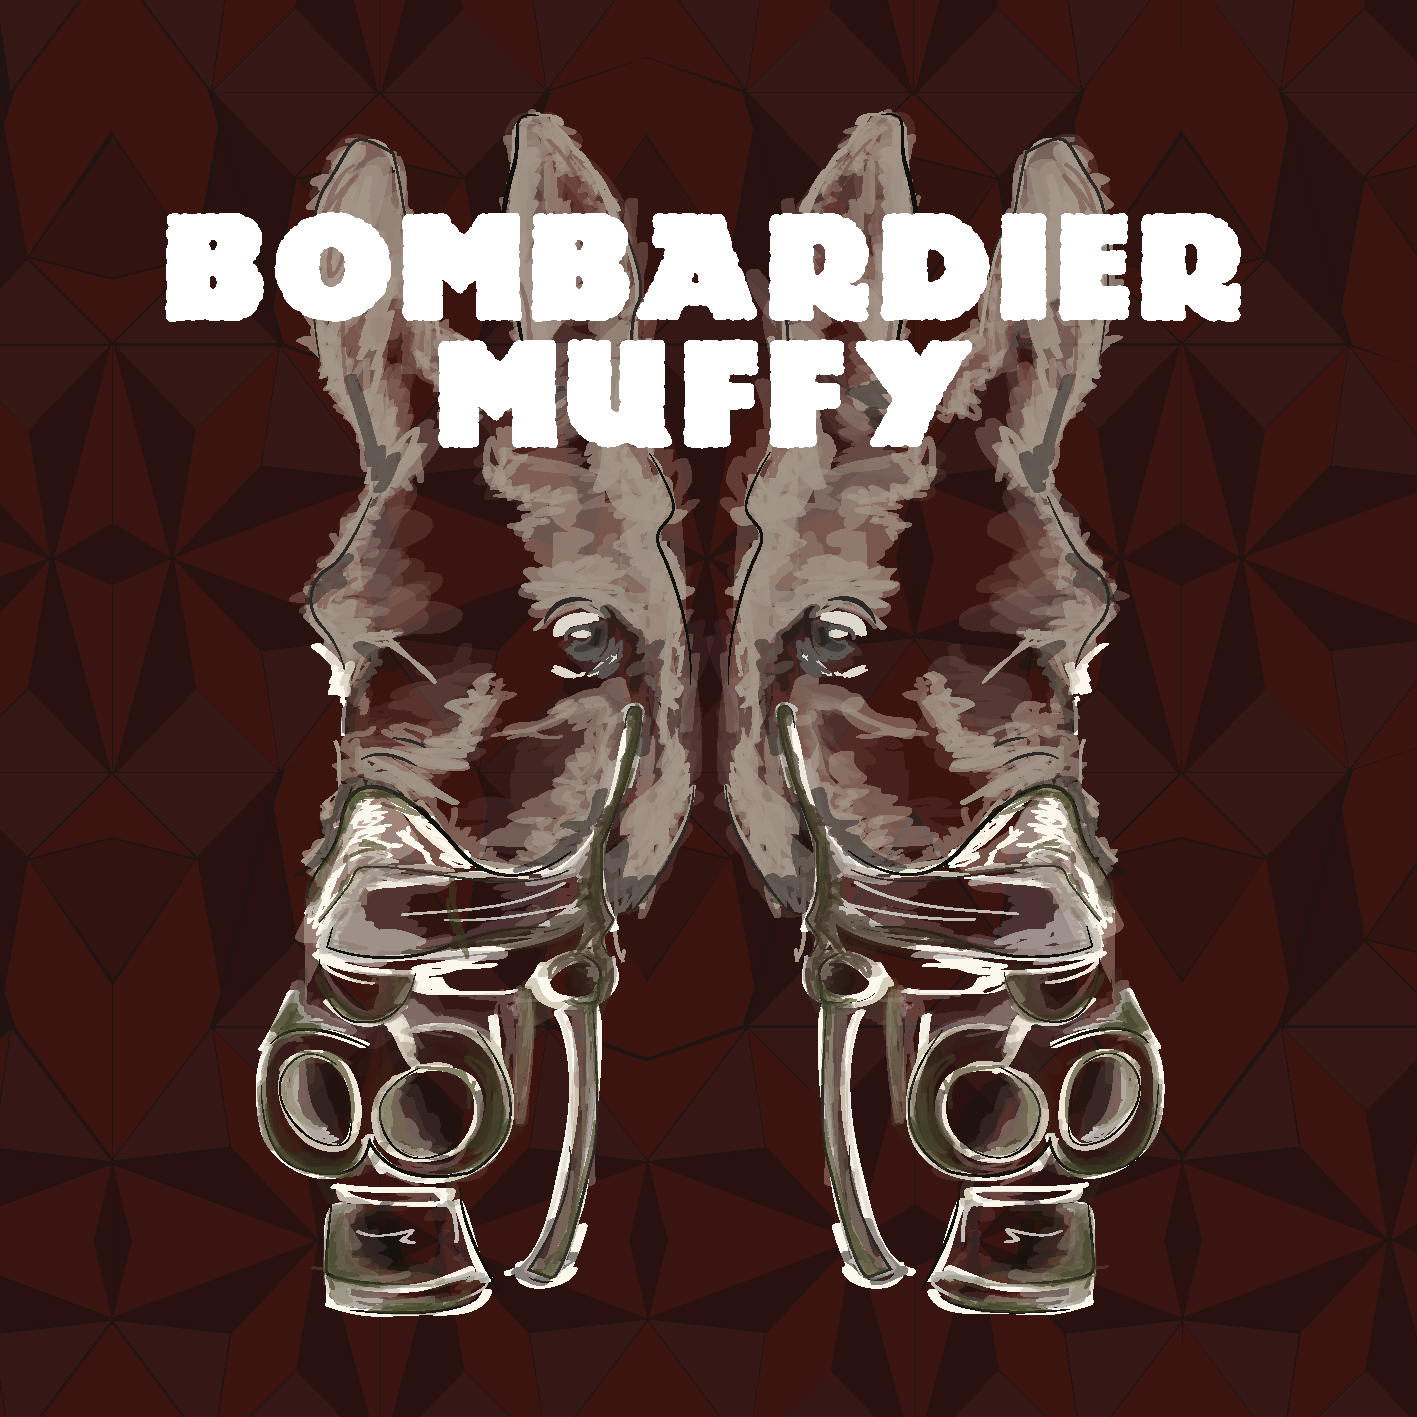 Bombardier Muffy